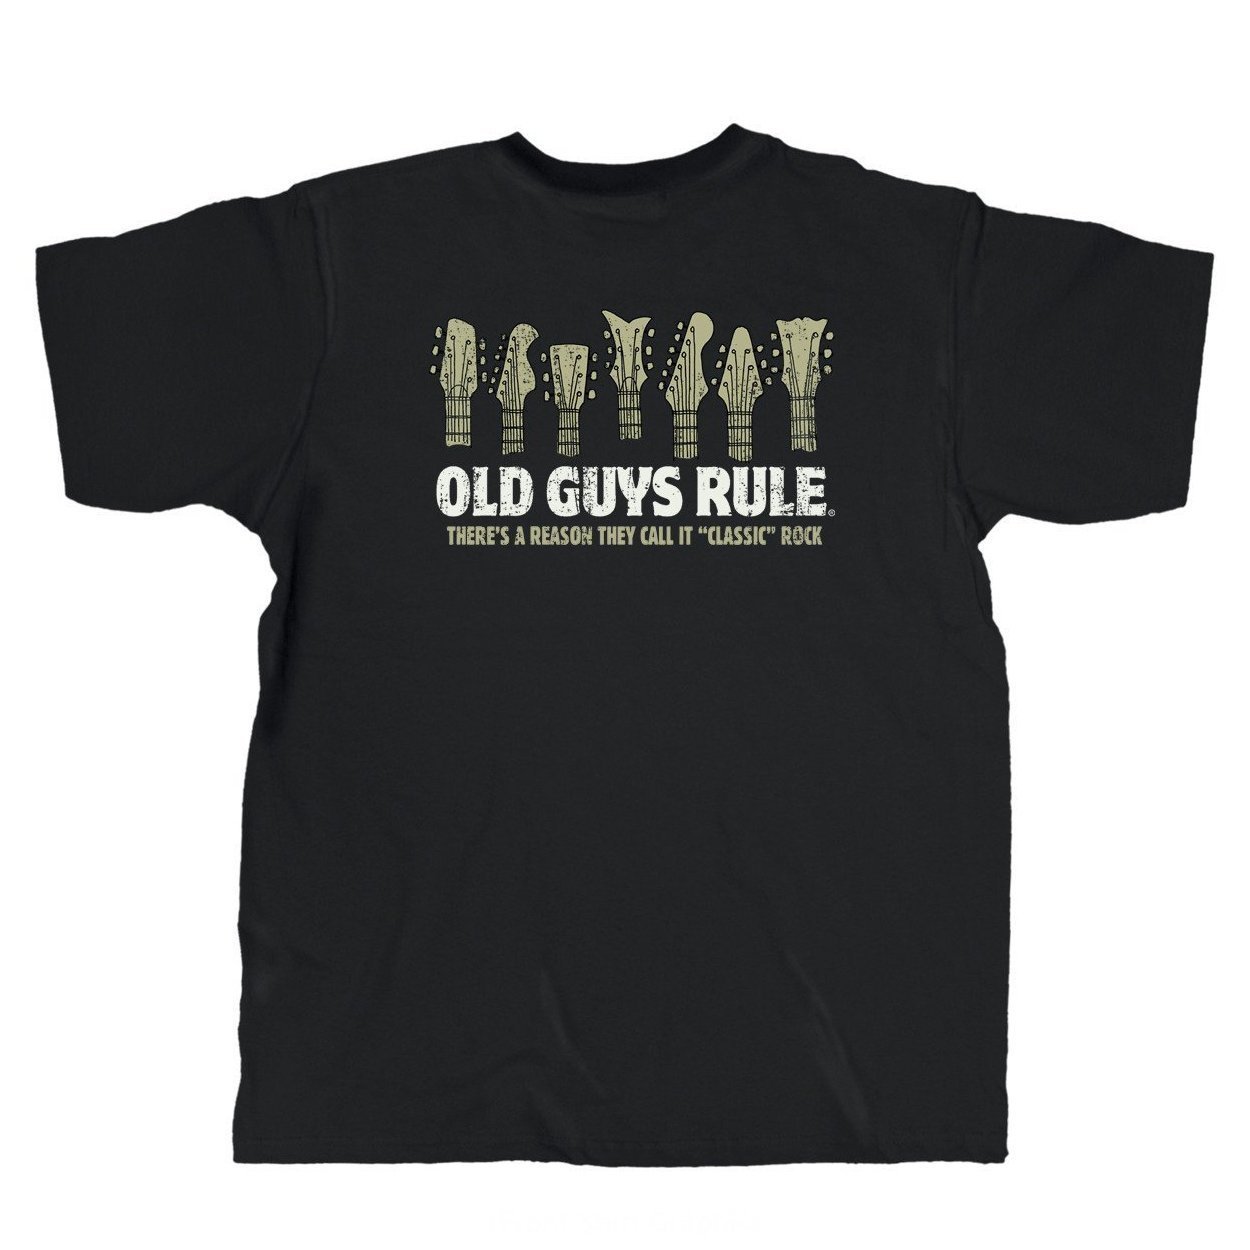 Old Guys Rule - Classic Rock - Black T-Shirt